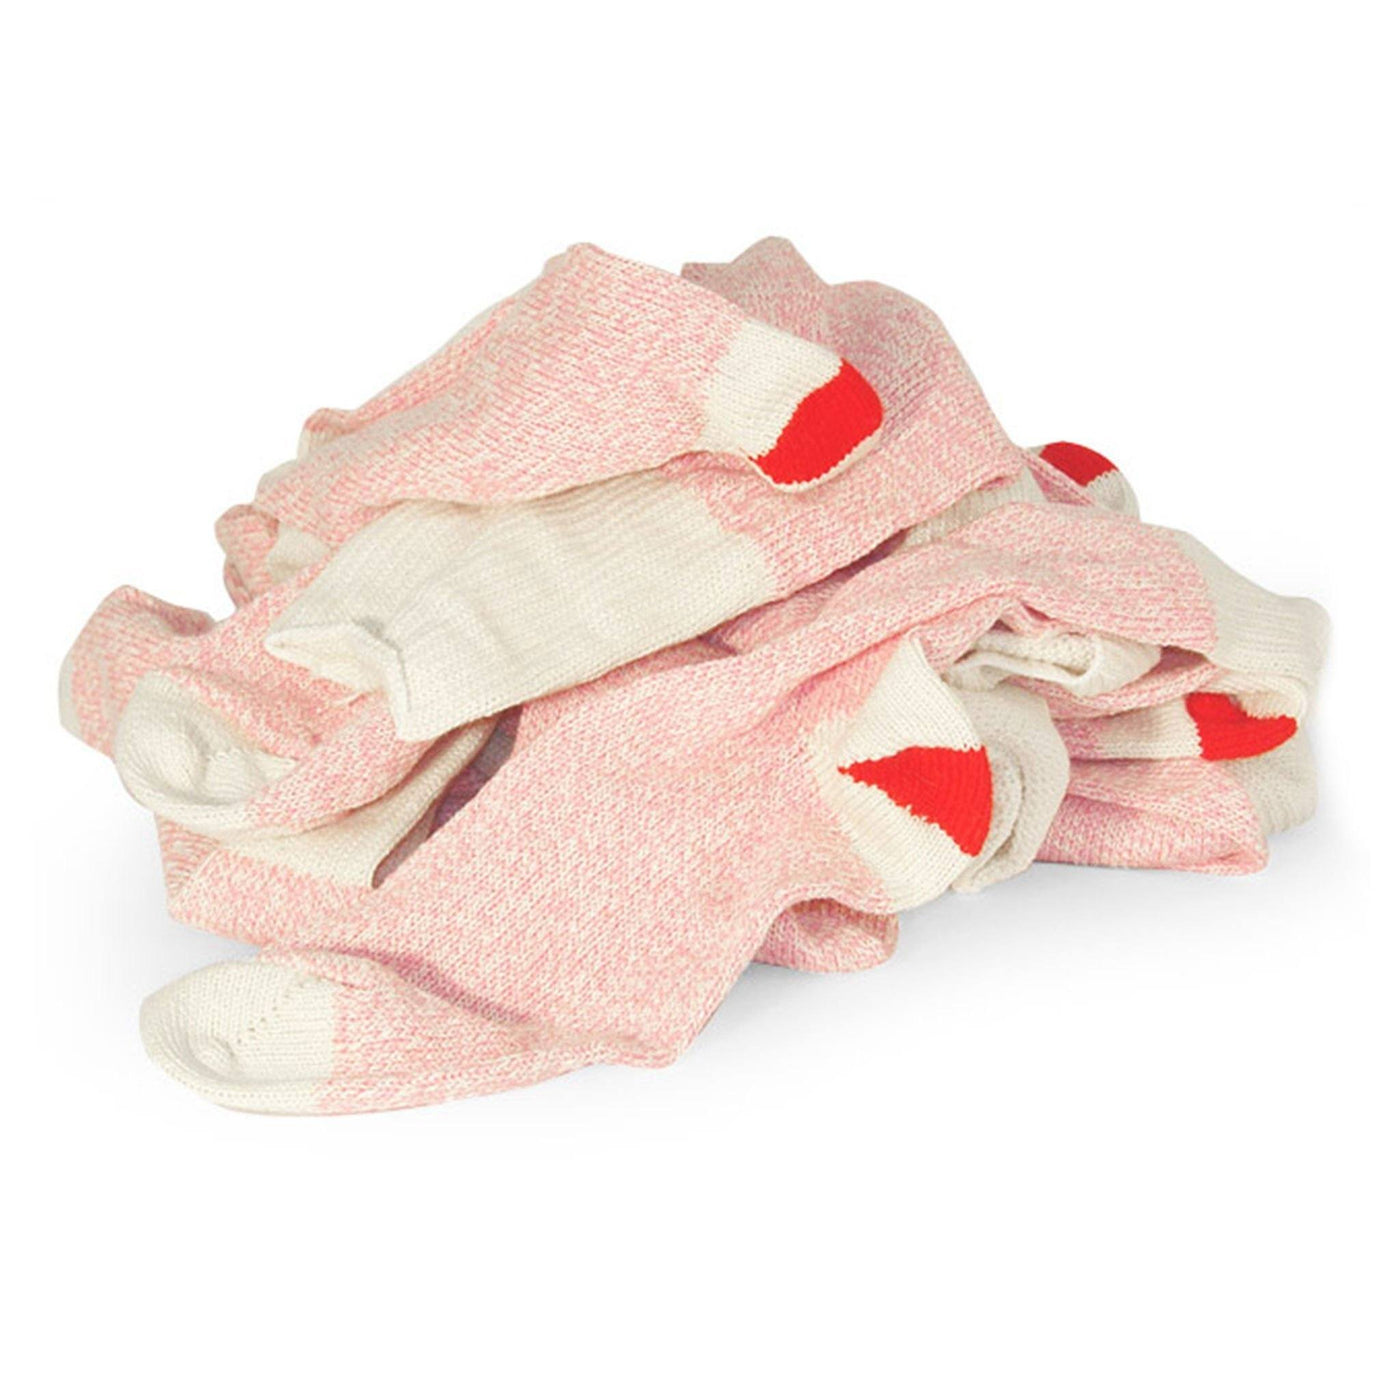 Monkey Socks by the Pound Pink No Size - Fox River® Socks